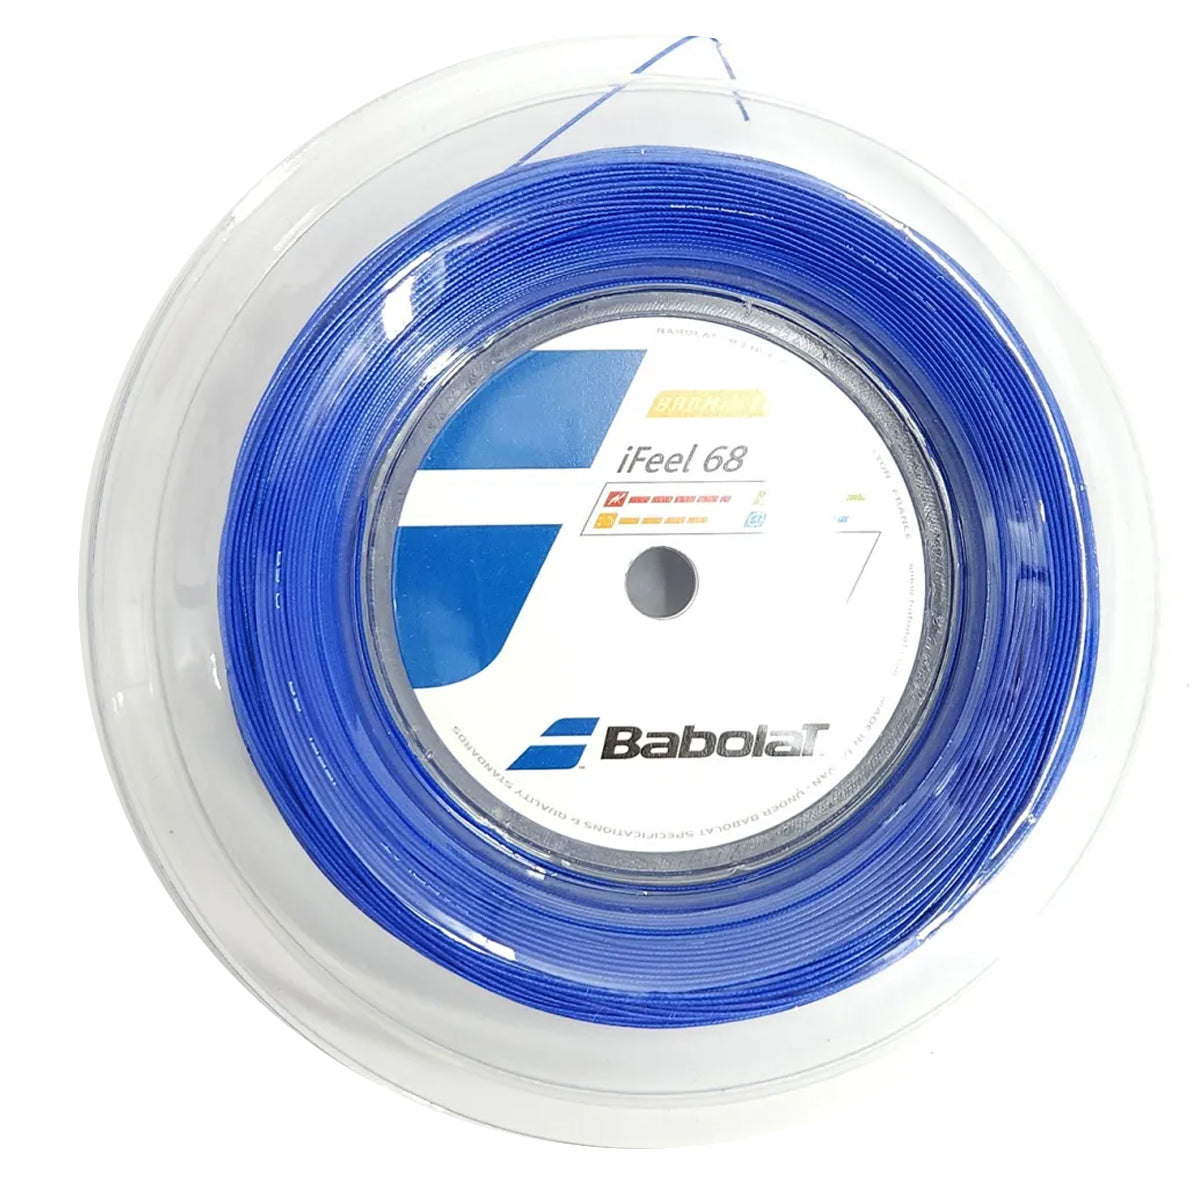 Babolat I Feel 68 Badminton String Reel (200M) - Best Price online Prokicksports.com